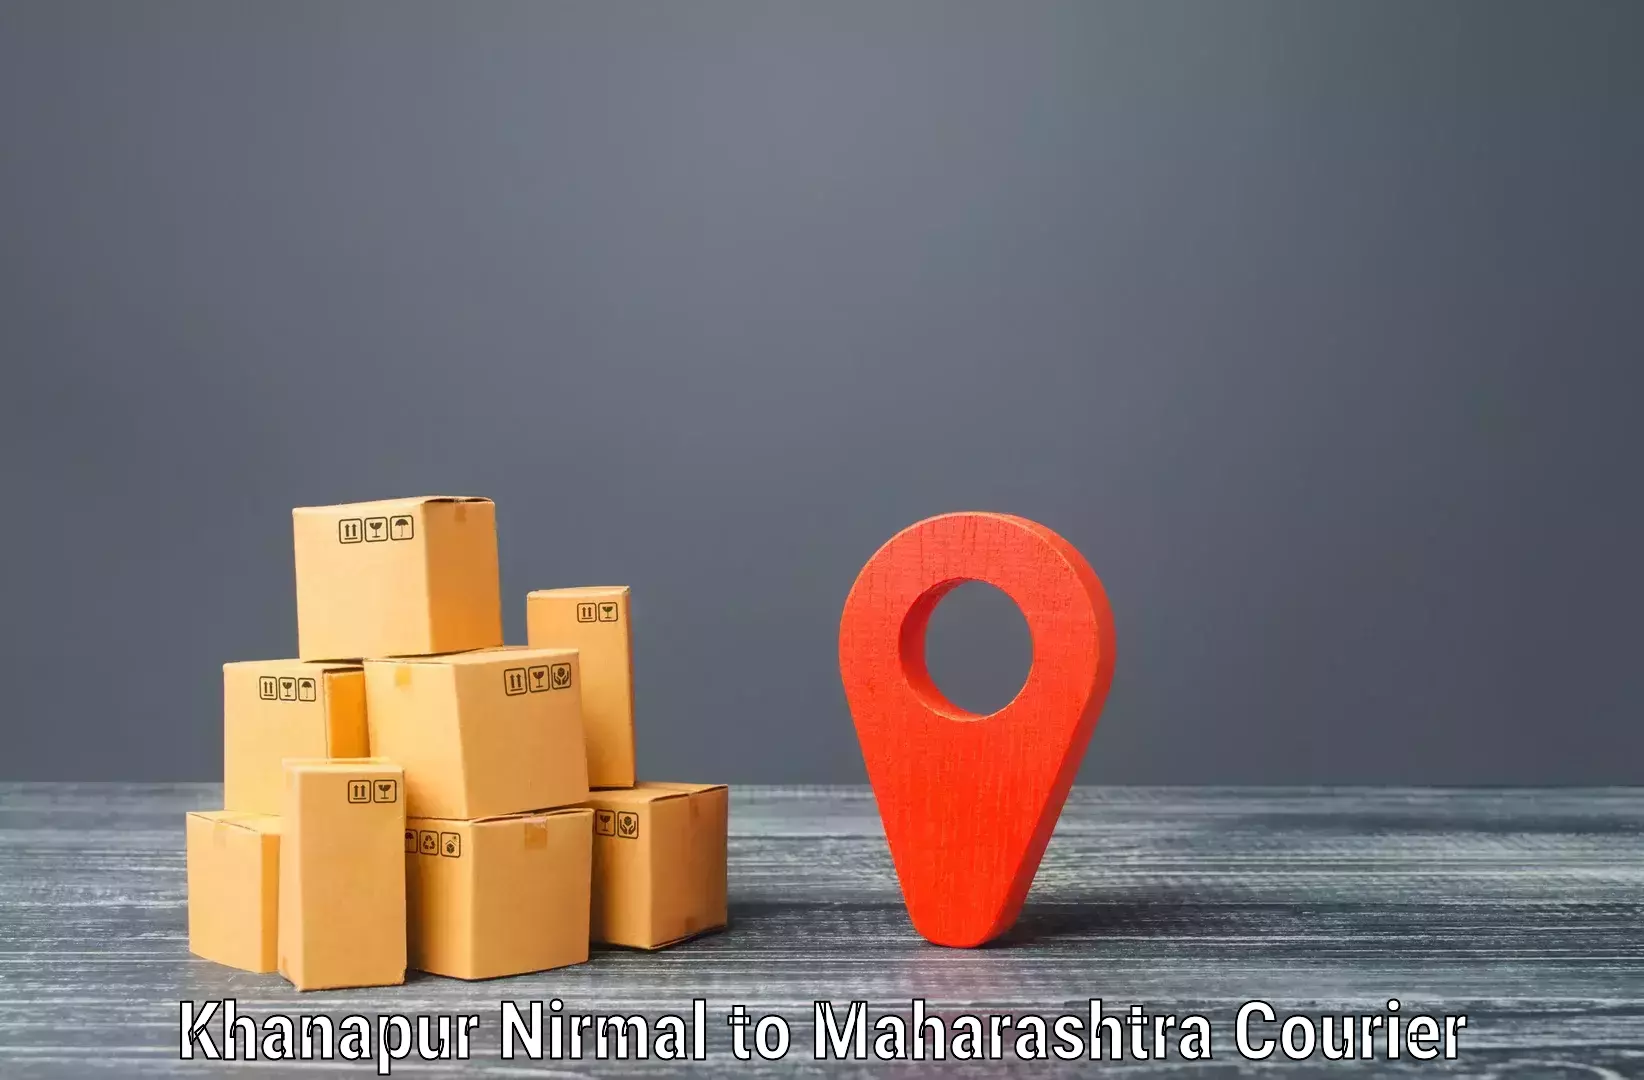 Tailored shipping plans Khanapur Nirmal to Nashik